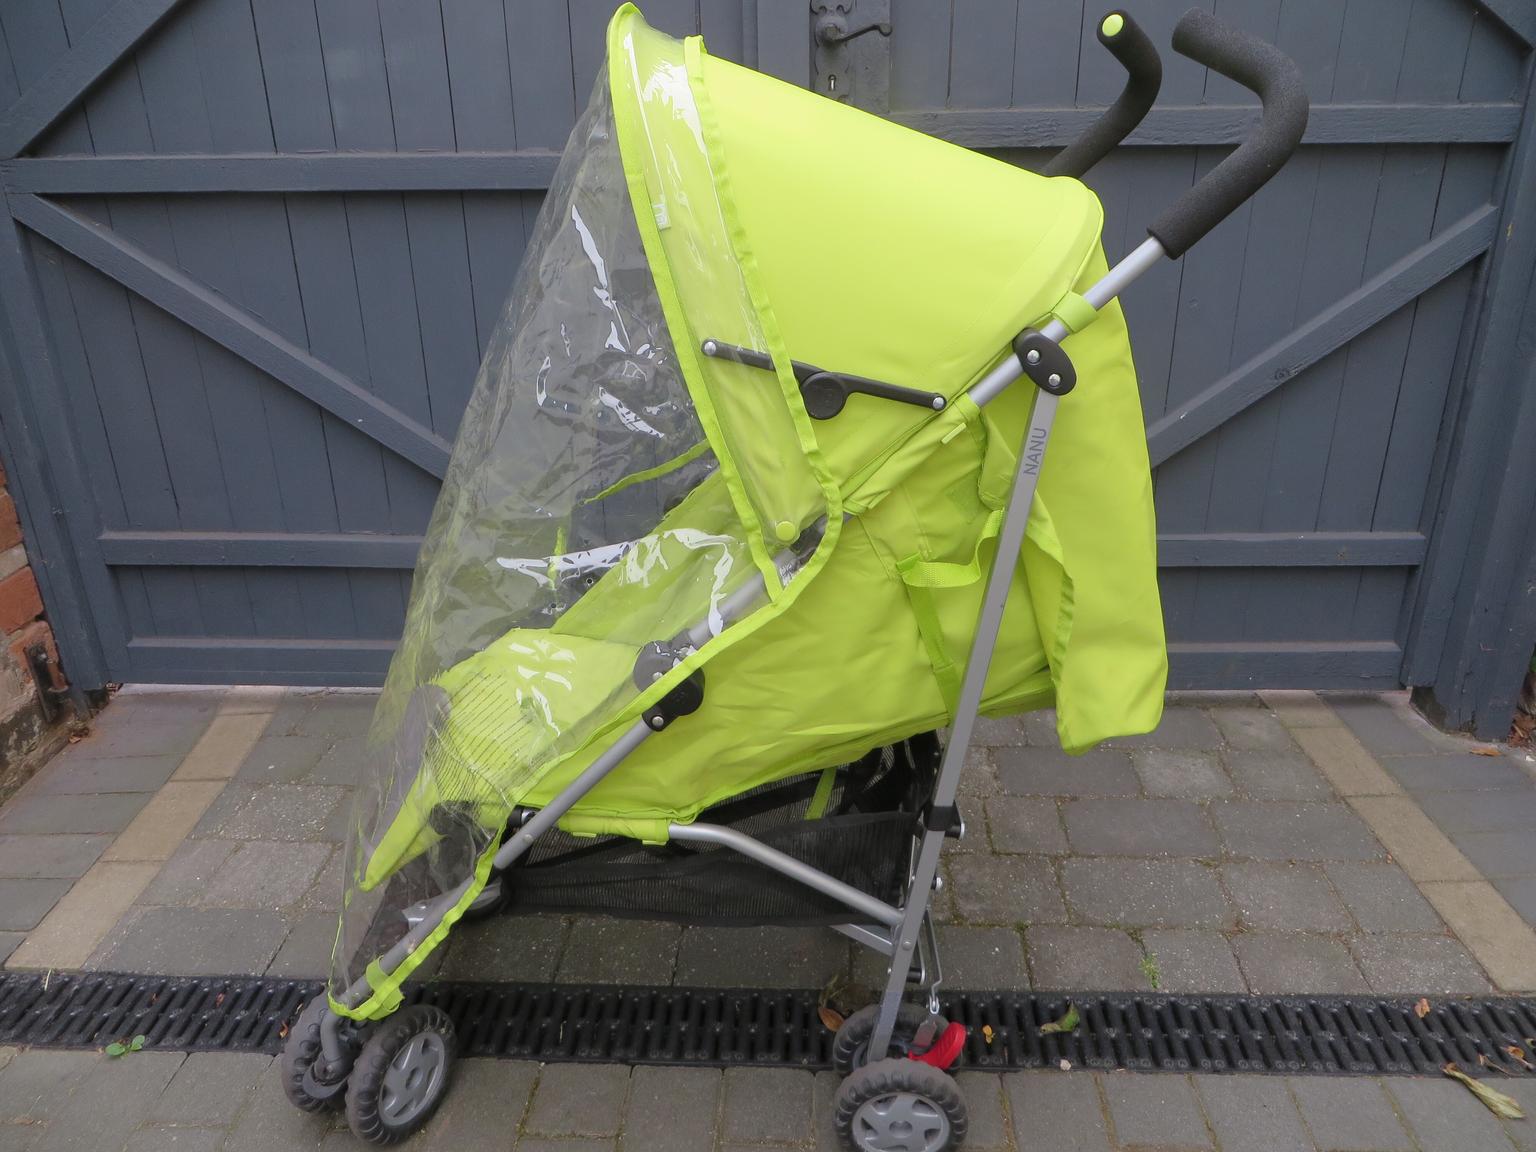 mothercare stroller rain cover